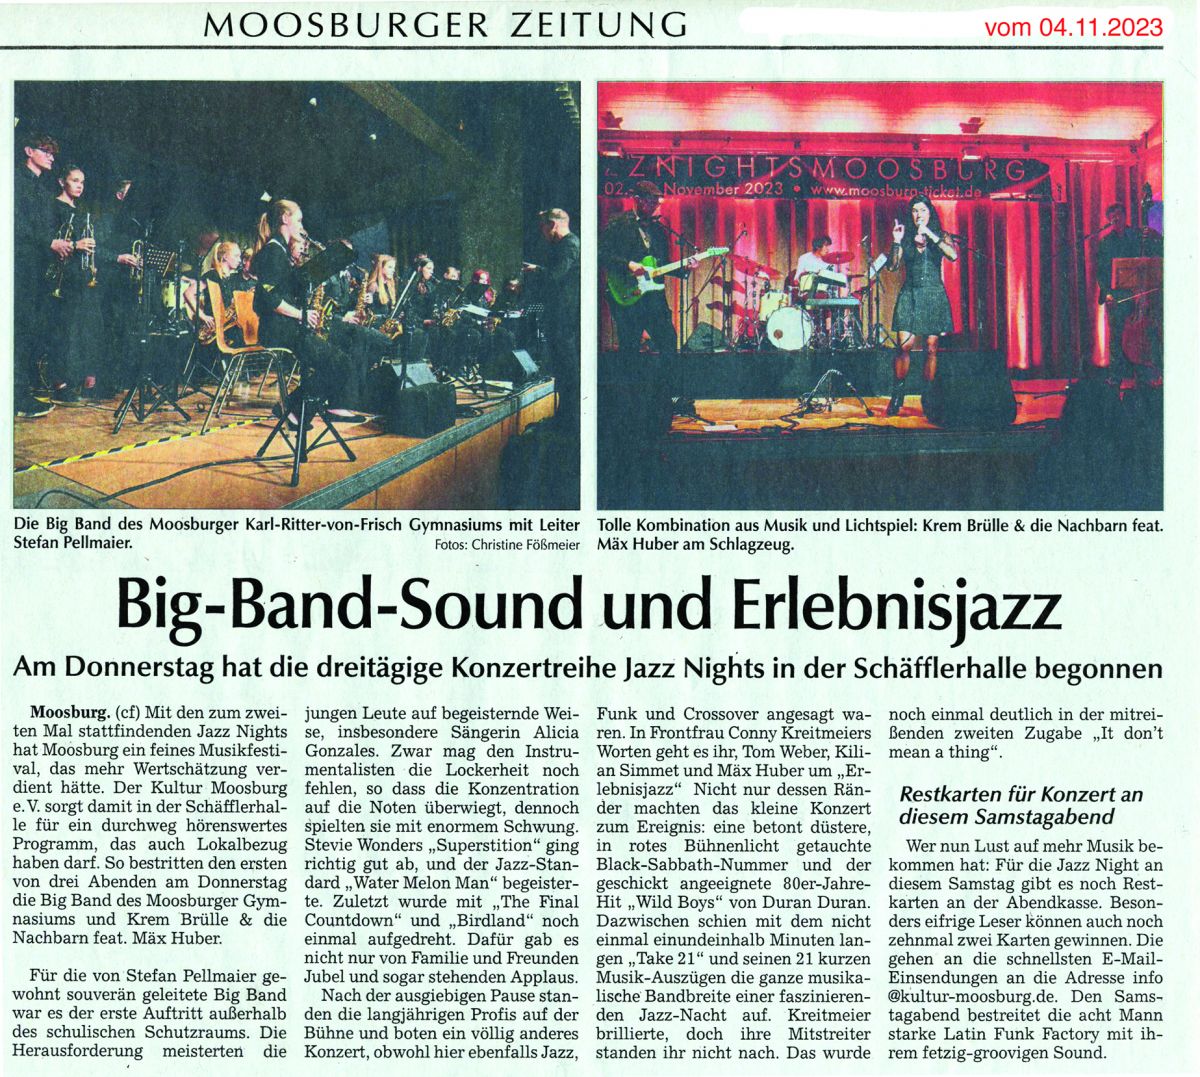 bigband+KremBrülle_Presse MoosburgerZ vom 04.11.2023 5,6MB.jpg